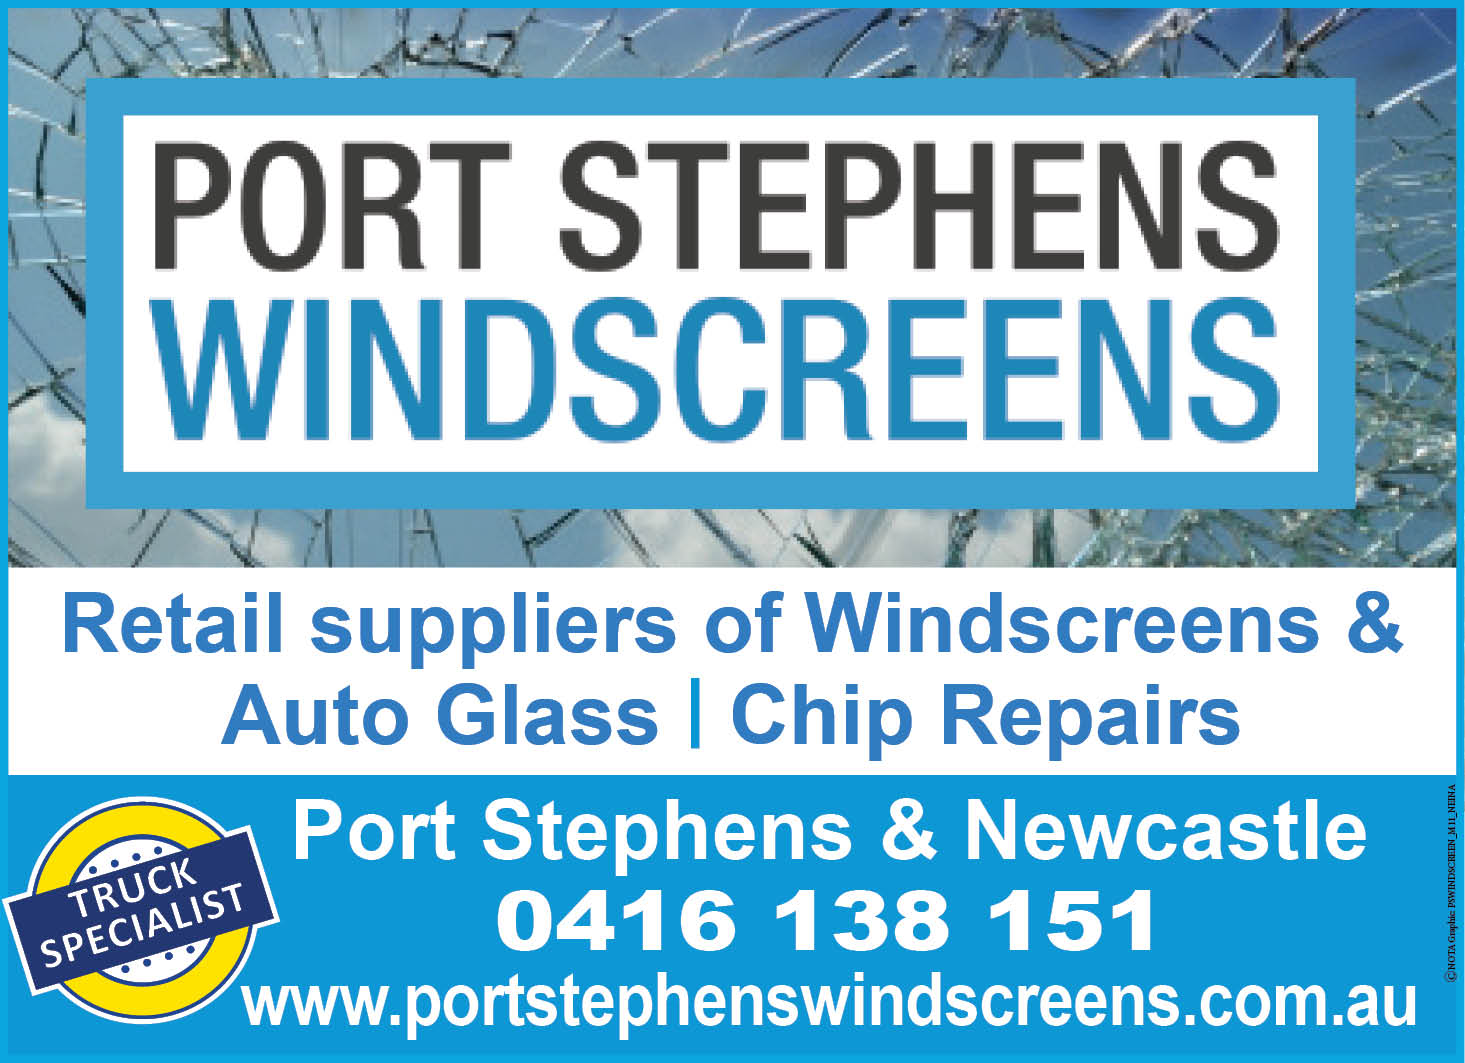 Port Stephens Windscreens